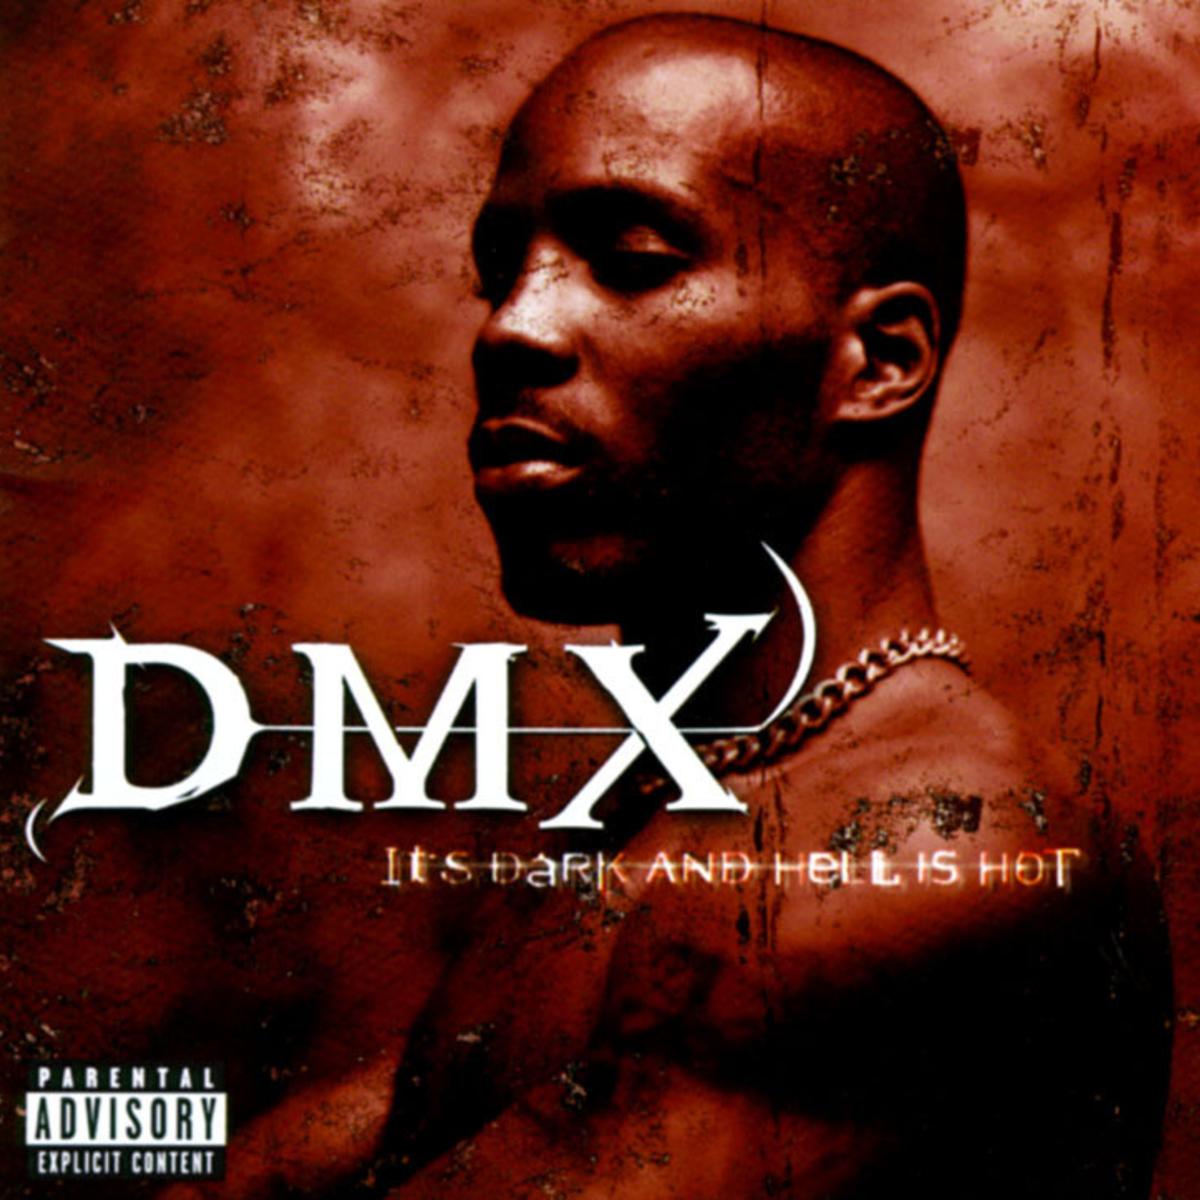 Dmx X Is Coming Audio Lyrics Download Mp3 Lyrics